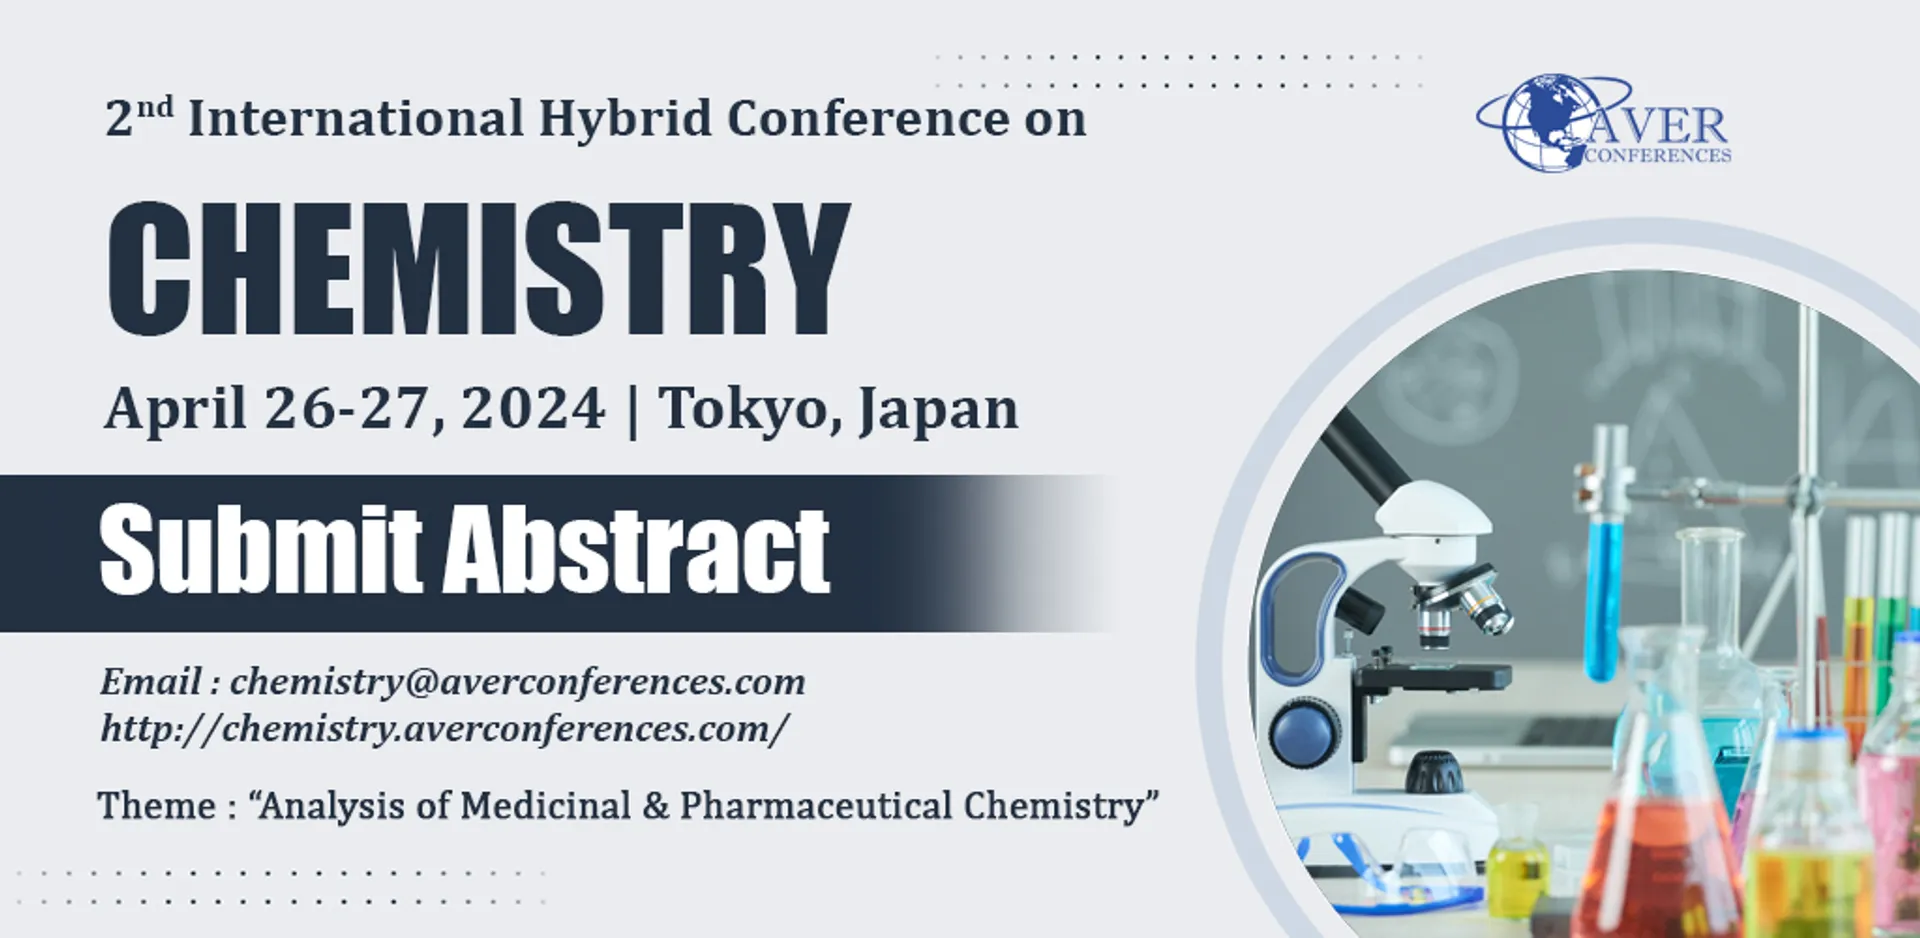 Chemistry Conference Japan-9vamdf.jpg